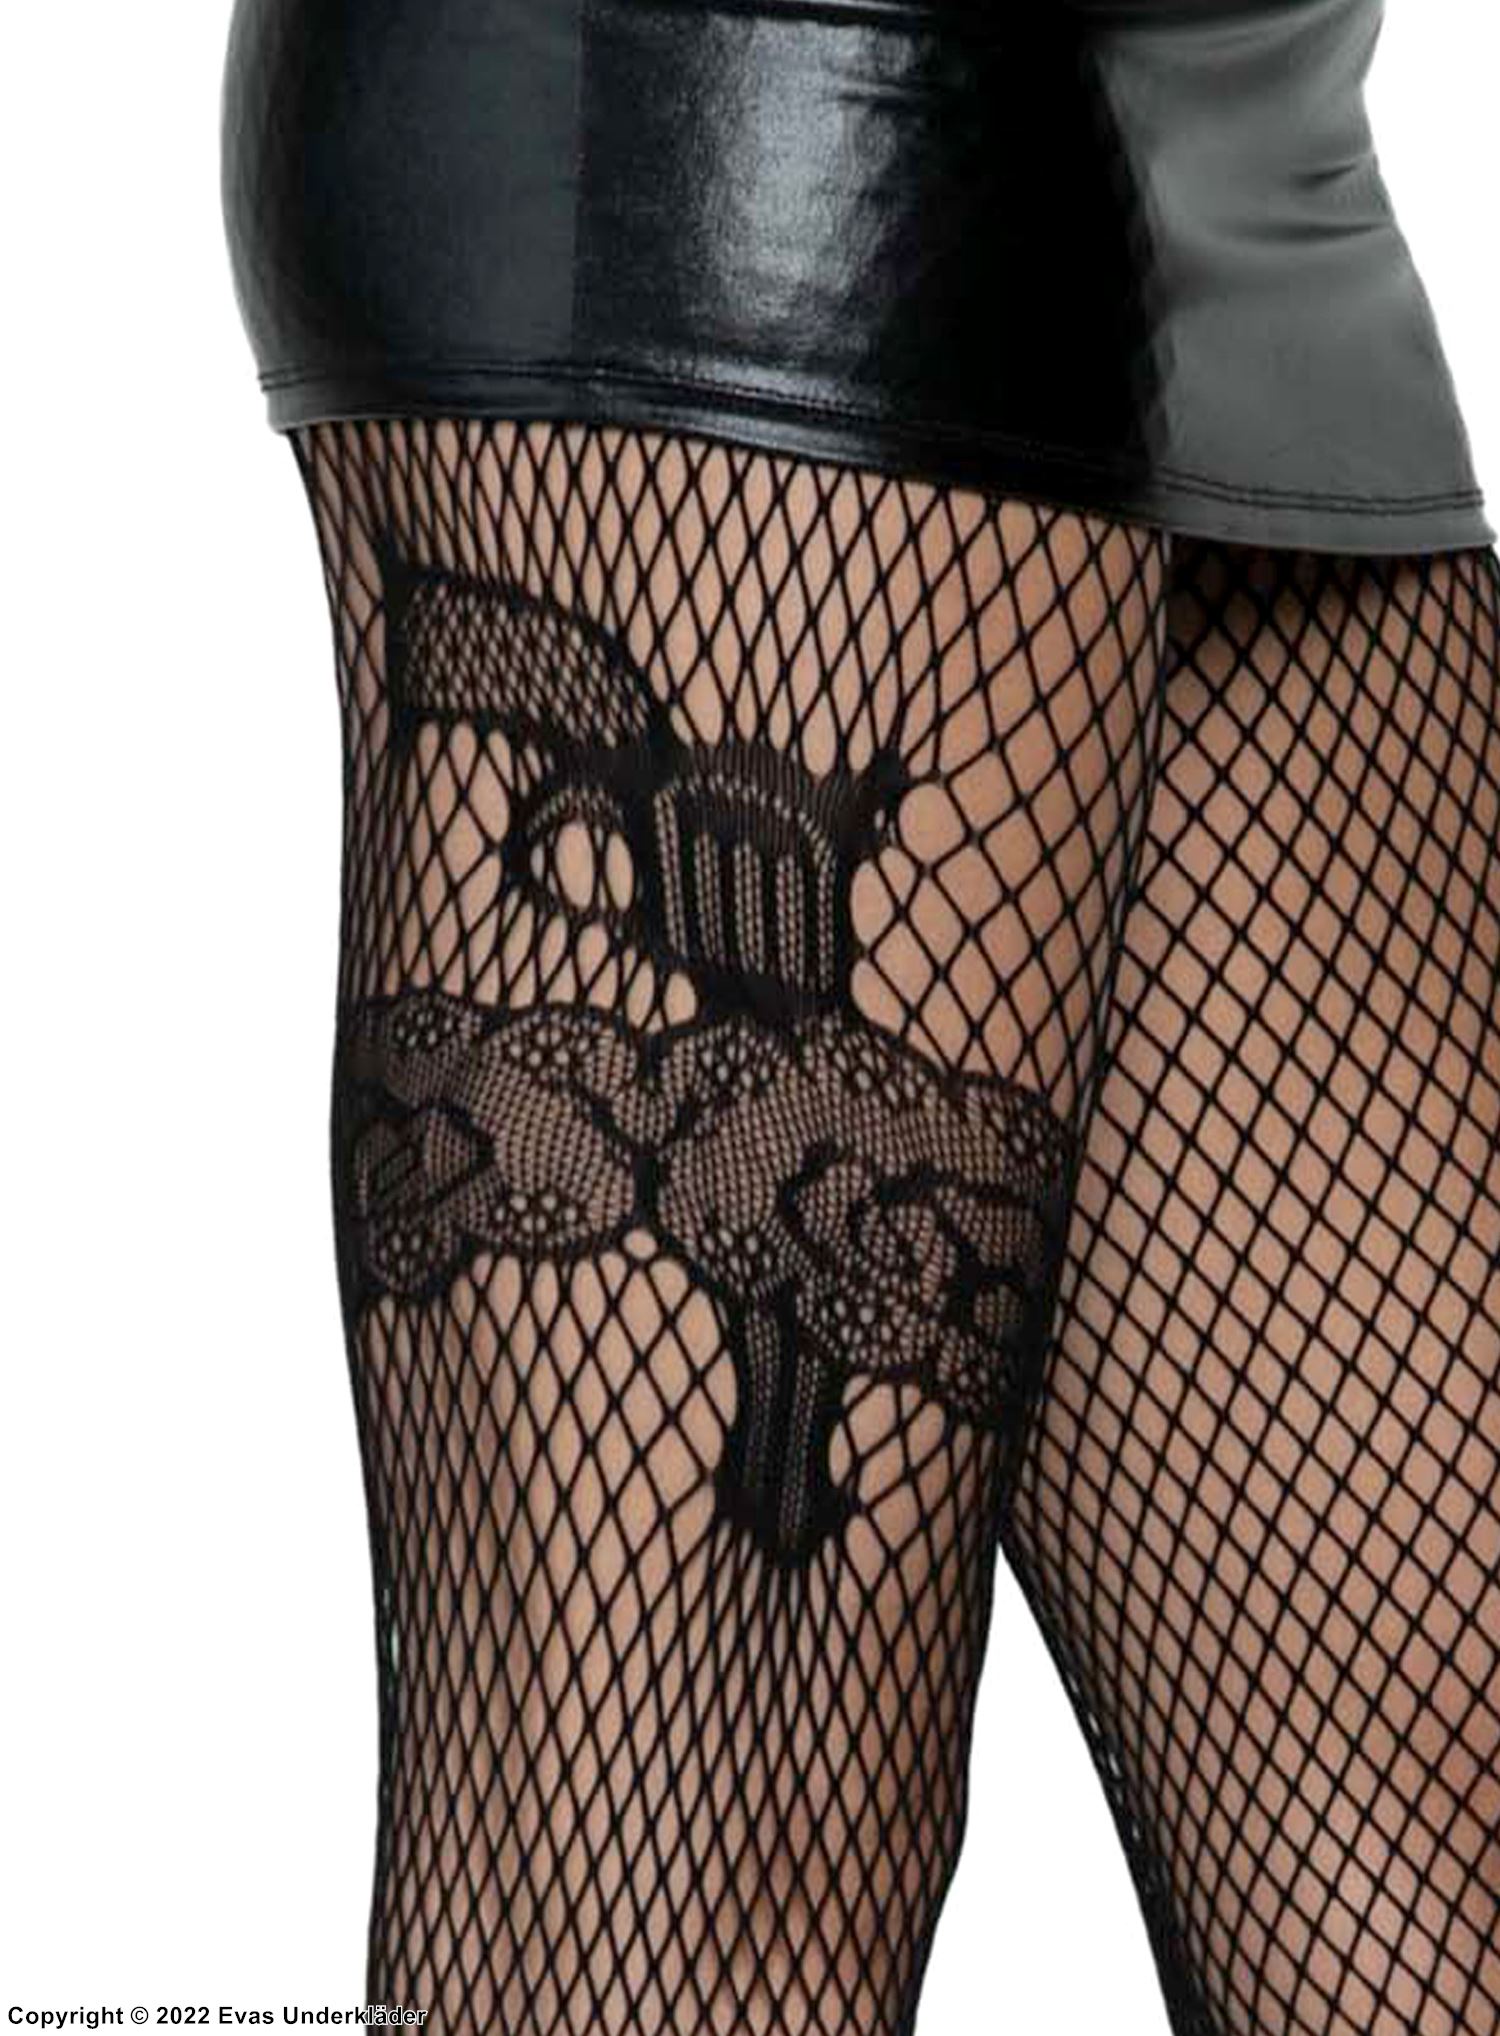 Stylish pantyhose, net, imitation garter, gun (pattern)